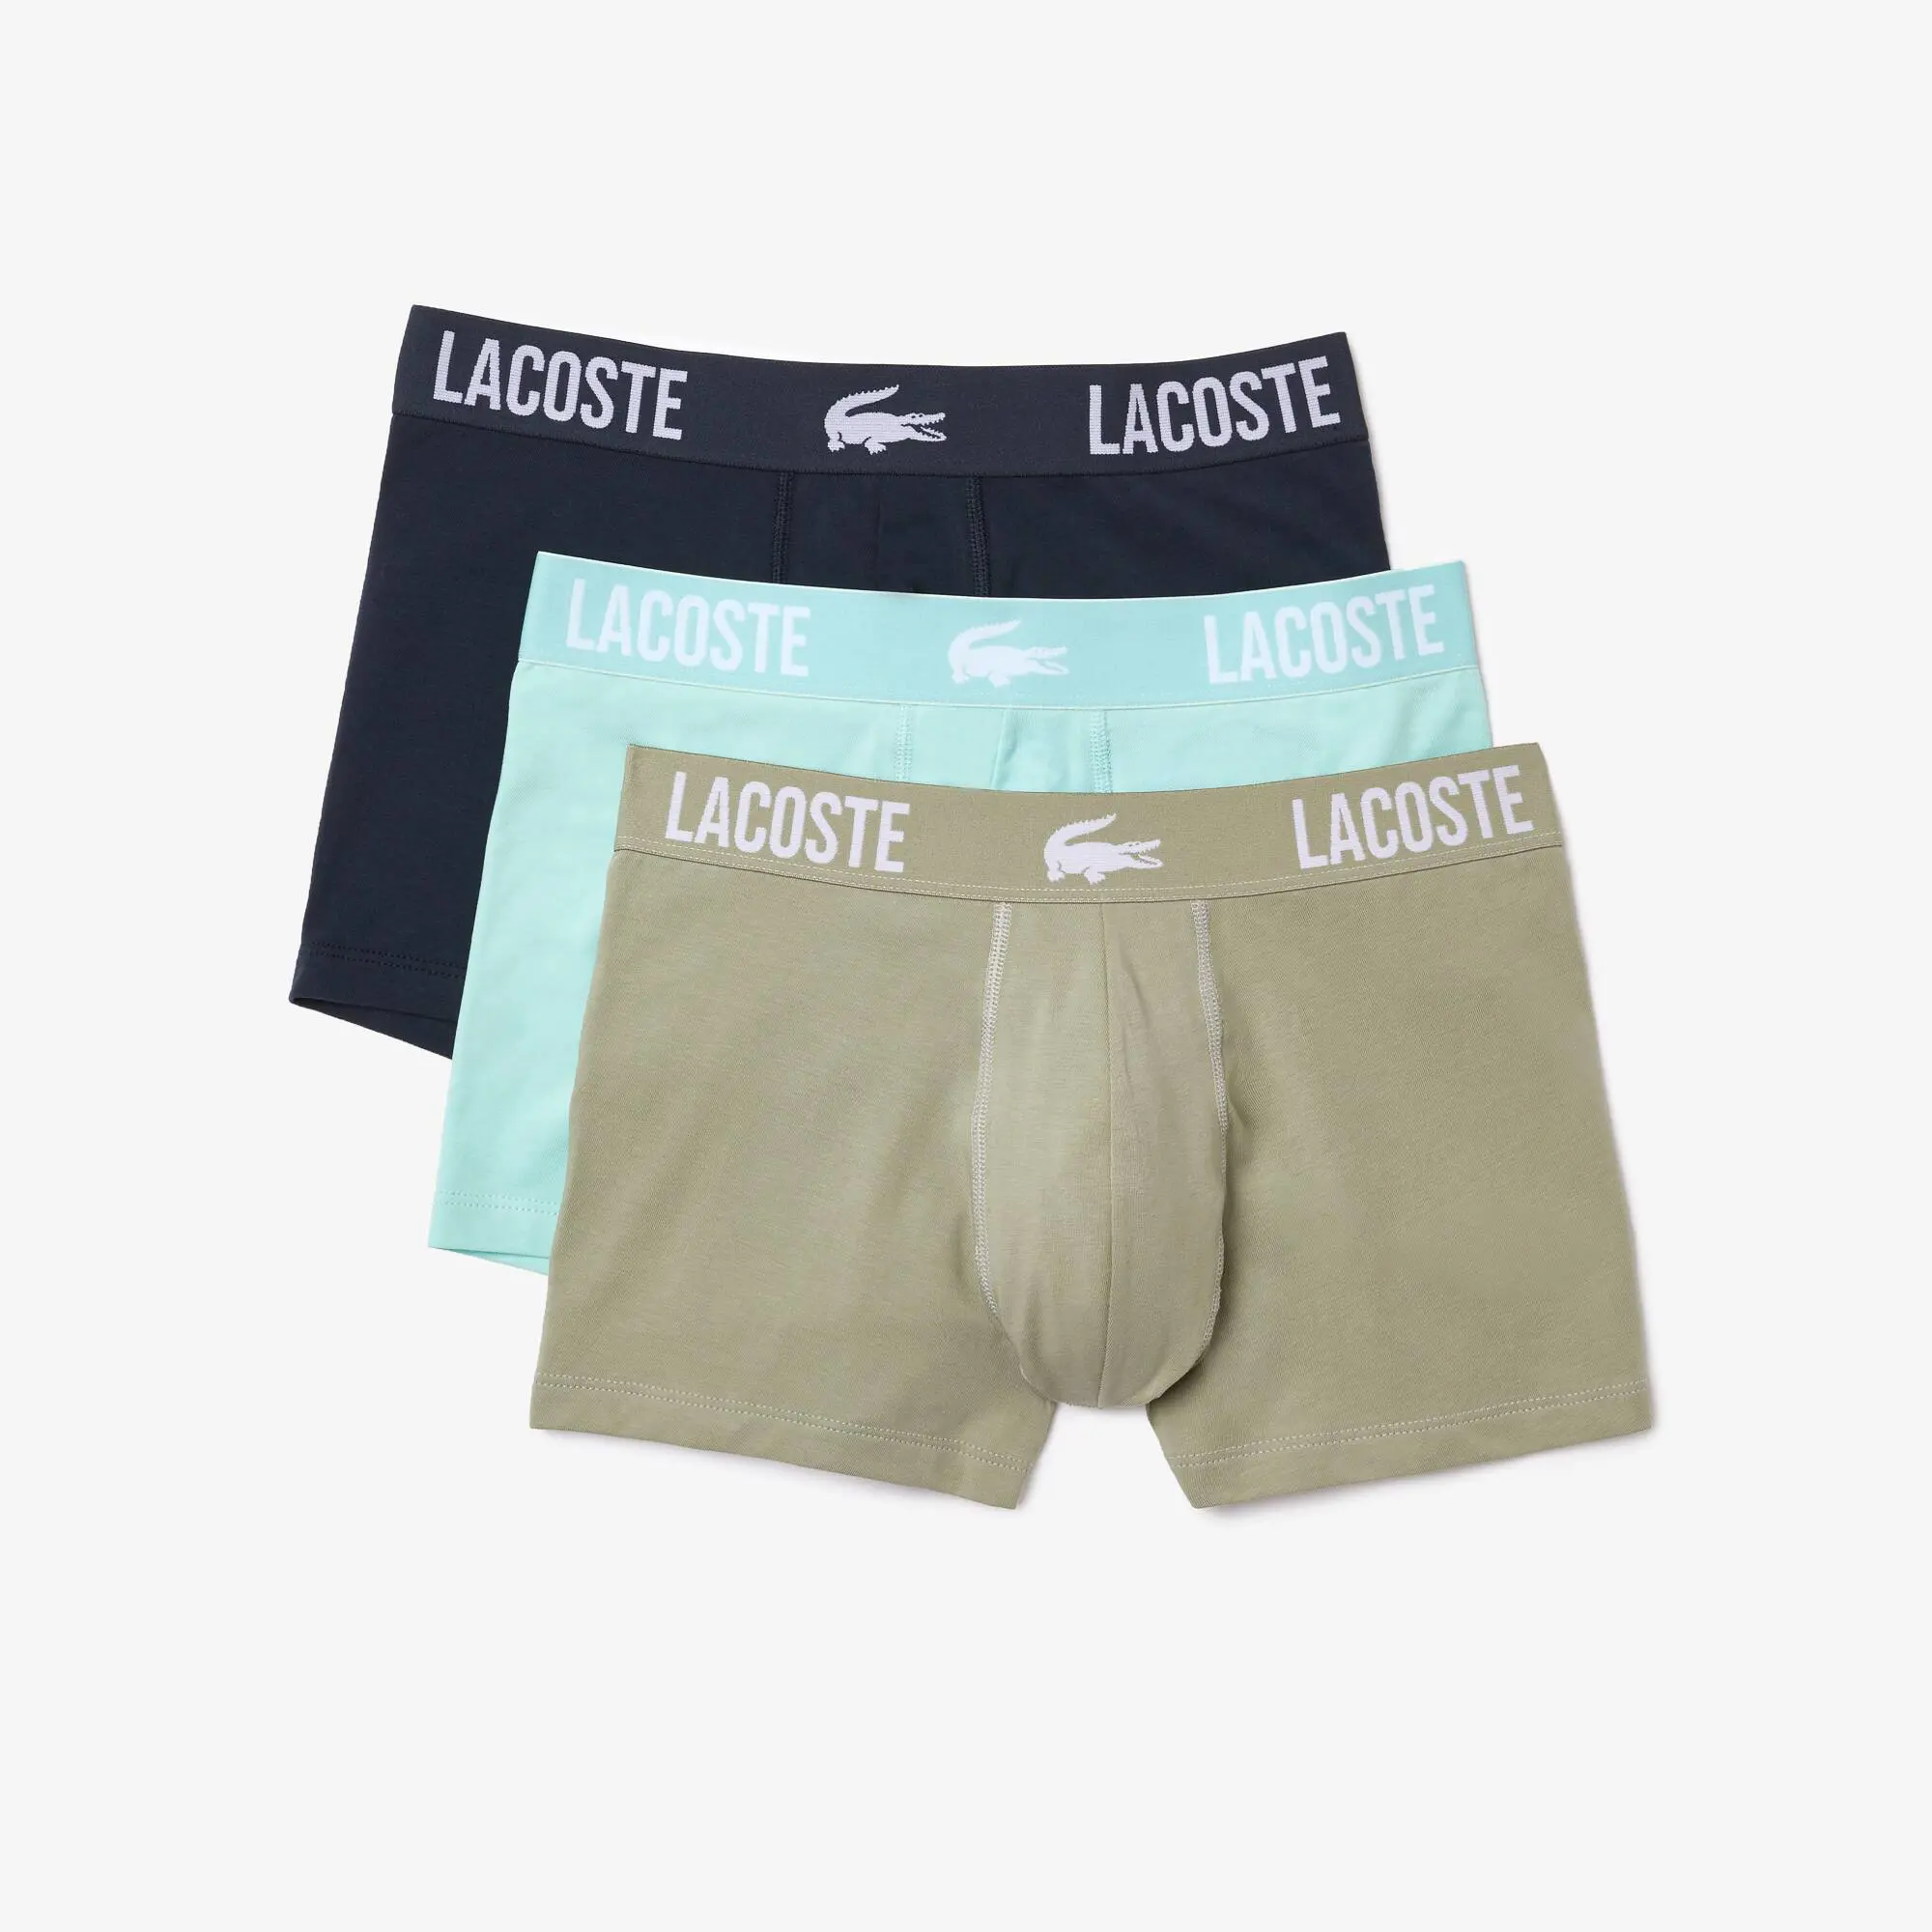 Lacoste Men's Branded Jersey Trunk 3-Pack. 2